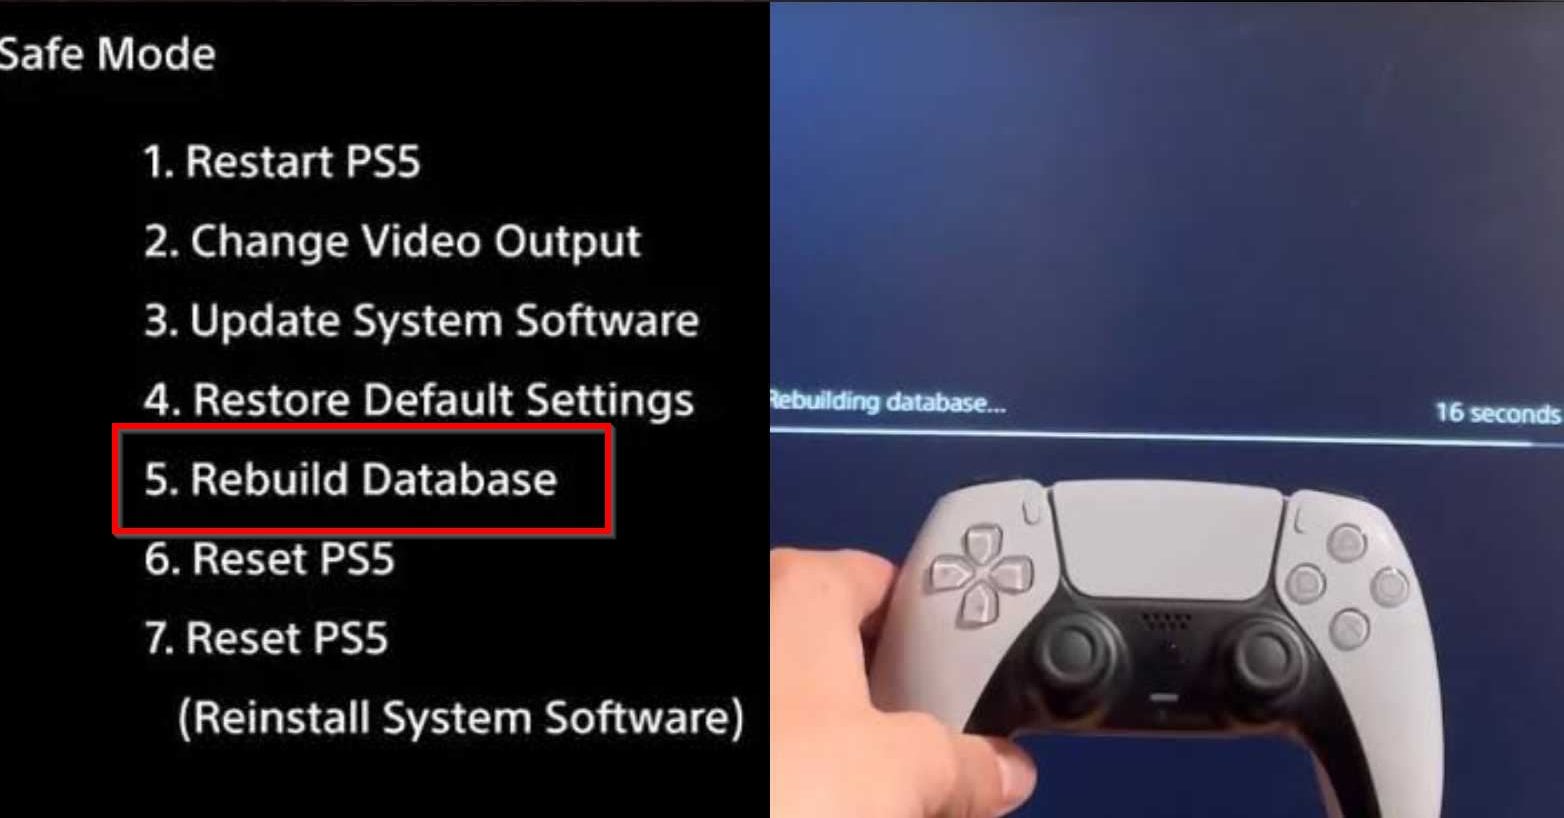 PS5 rebuild database